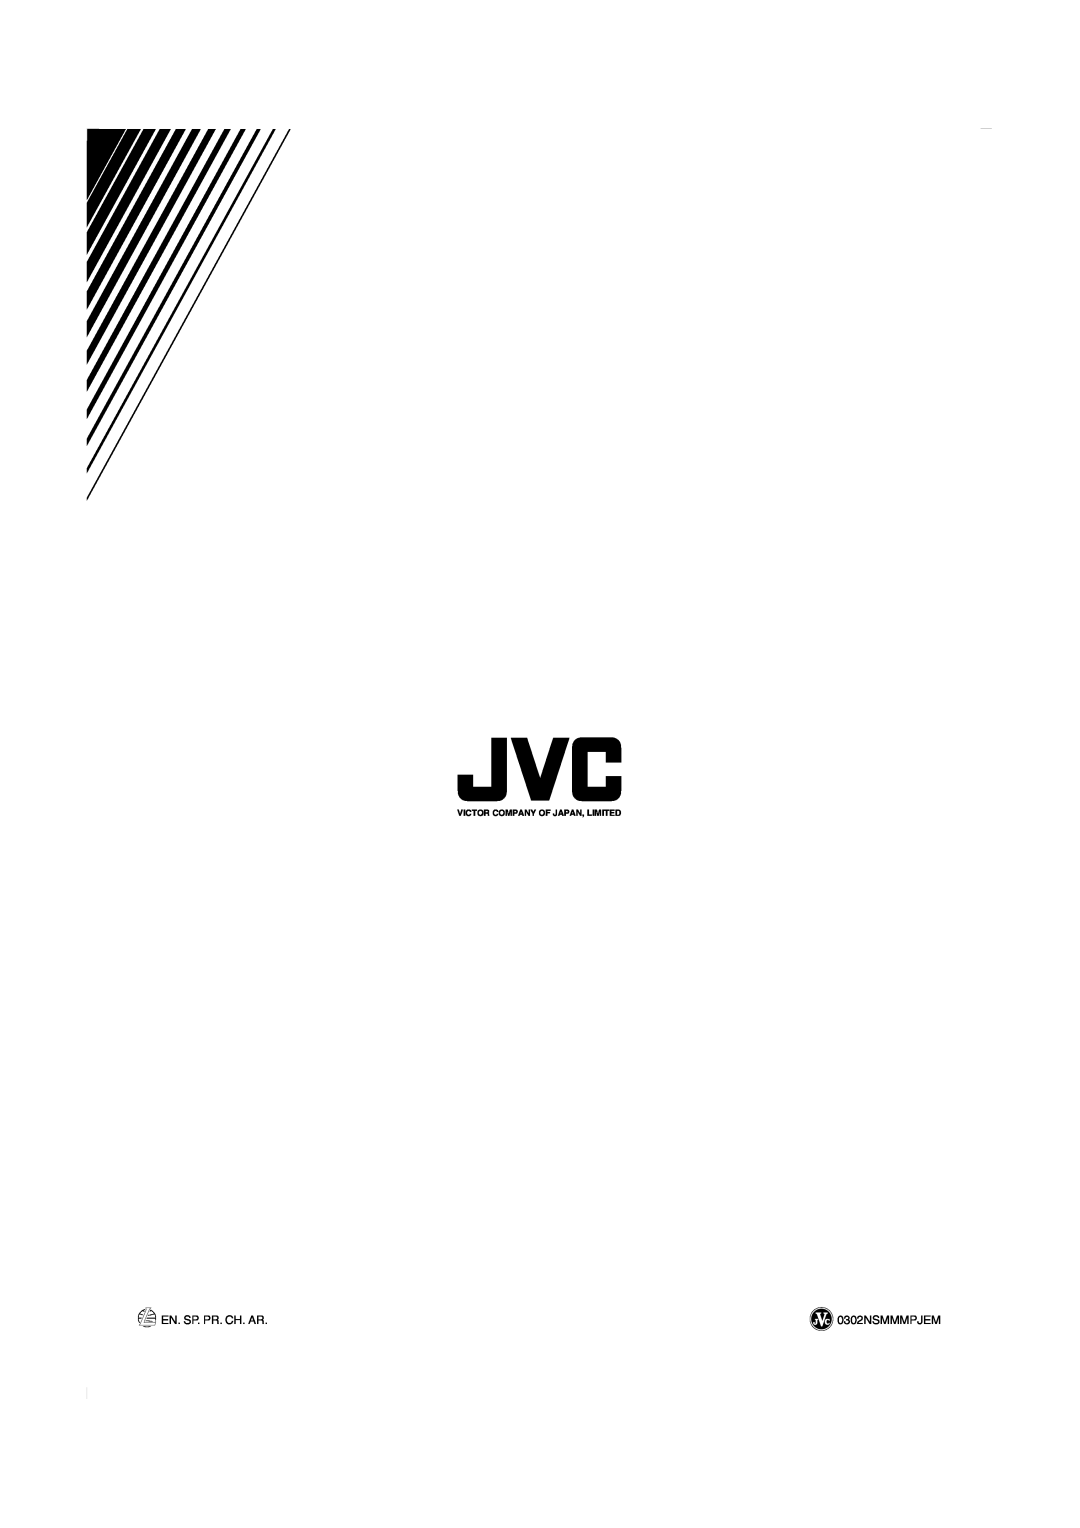 JVC CA-MXDVA9, CA-MXDVB10 manual En. Sp. Pr. Ch. Ar, 0302NSMMMPJEM, Victor Company Of Japan, Limited 